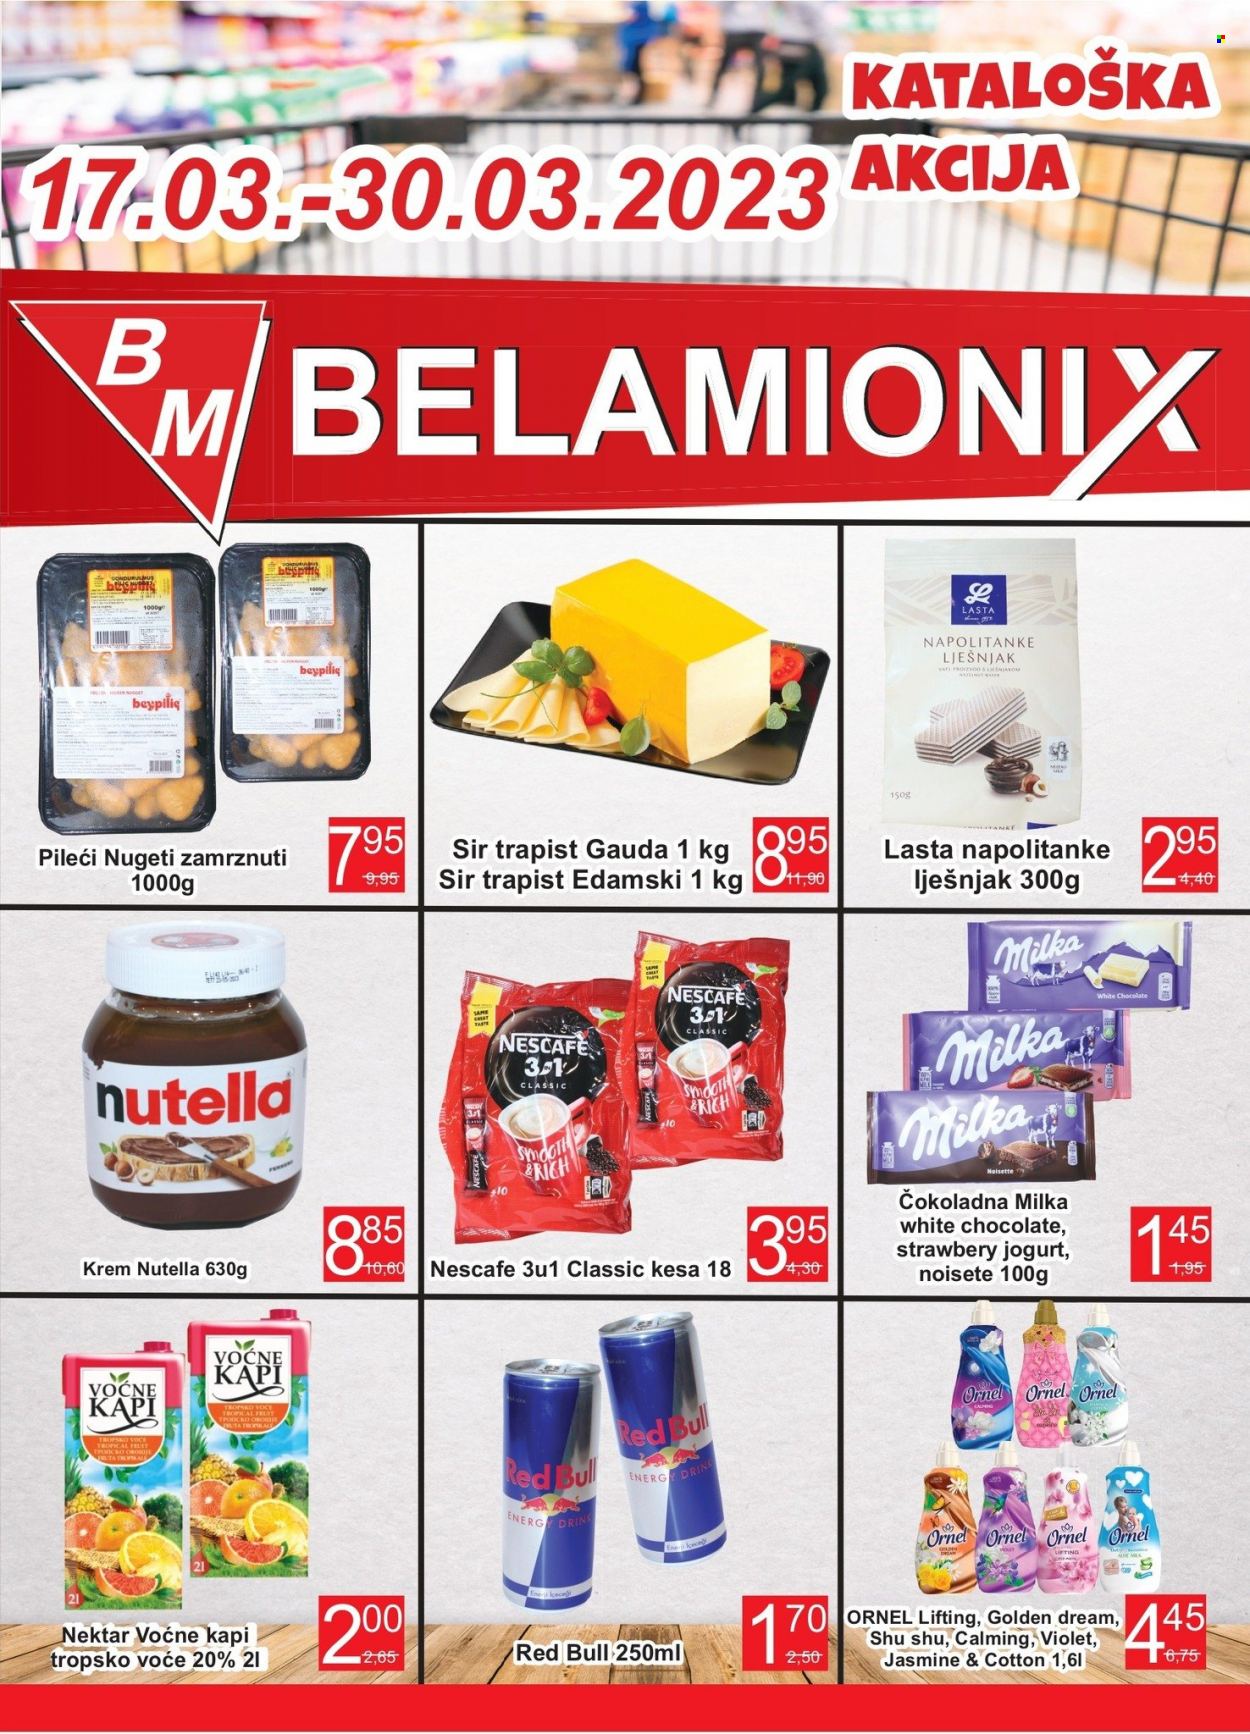 thumbnail - Belamionix katalog - 17.03.2023. - 30.03.2023. - Sniženi proizvodi - gouda, sir, sir trapist, jogurt, Milka, Nutella, napolitanke, energy drink, Red Bull, Ornel. Stranica 1.